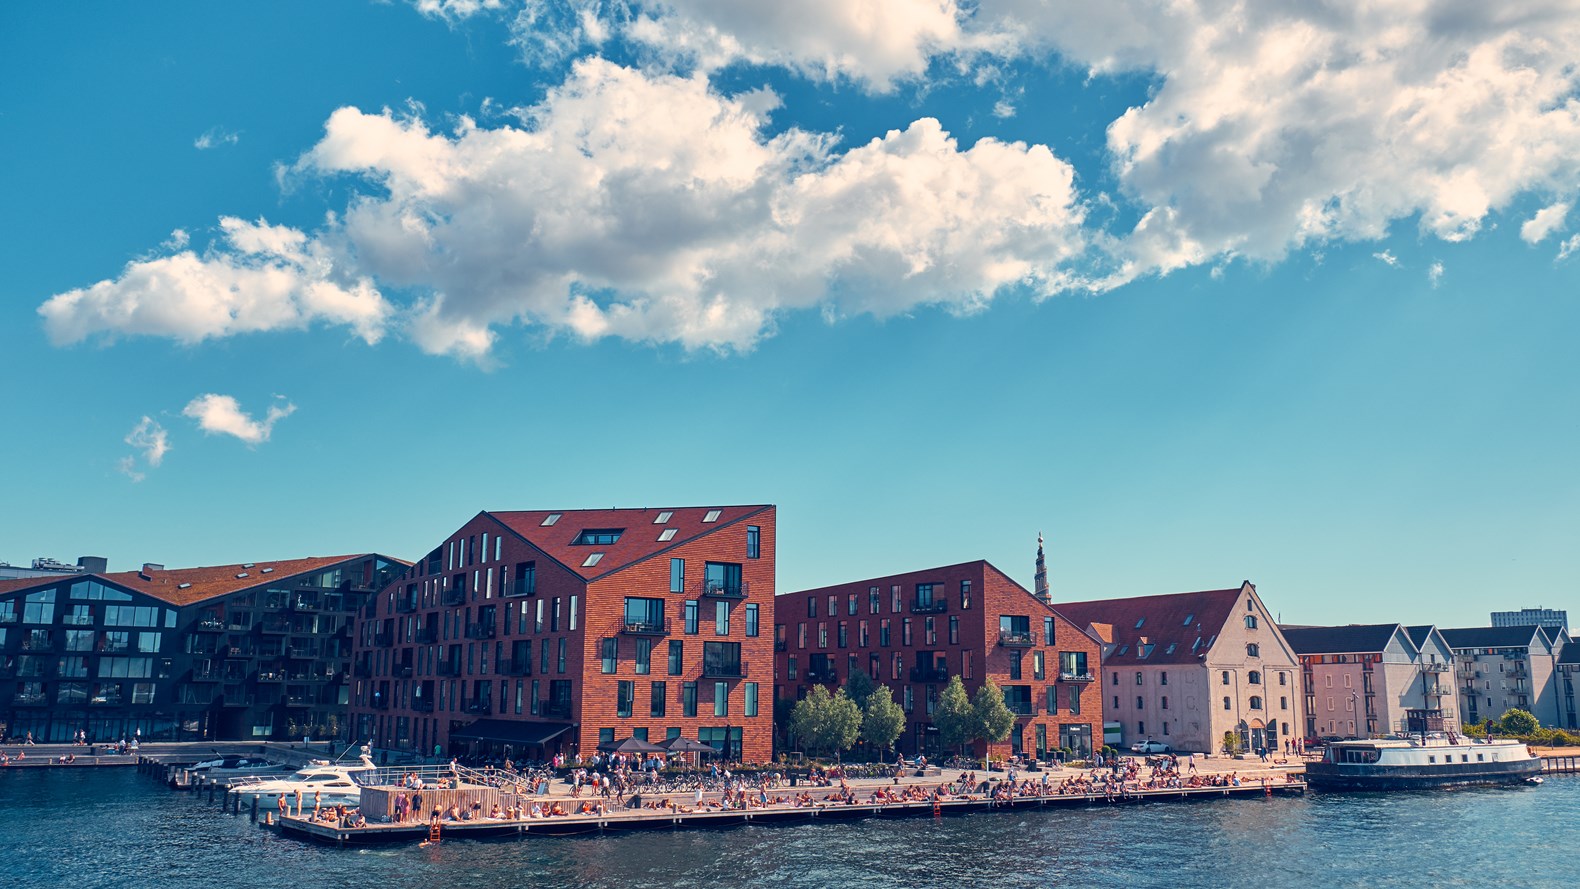 boliger-koebenhavns-havn.jpg